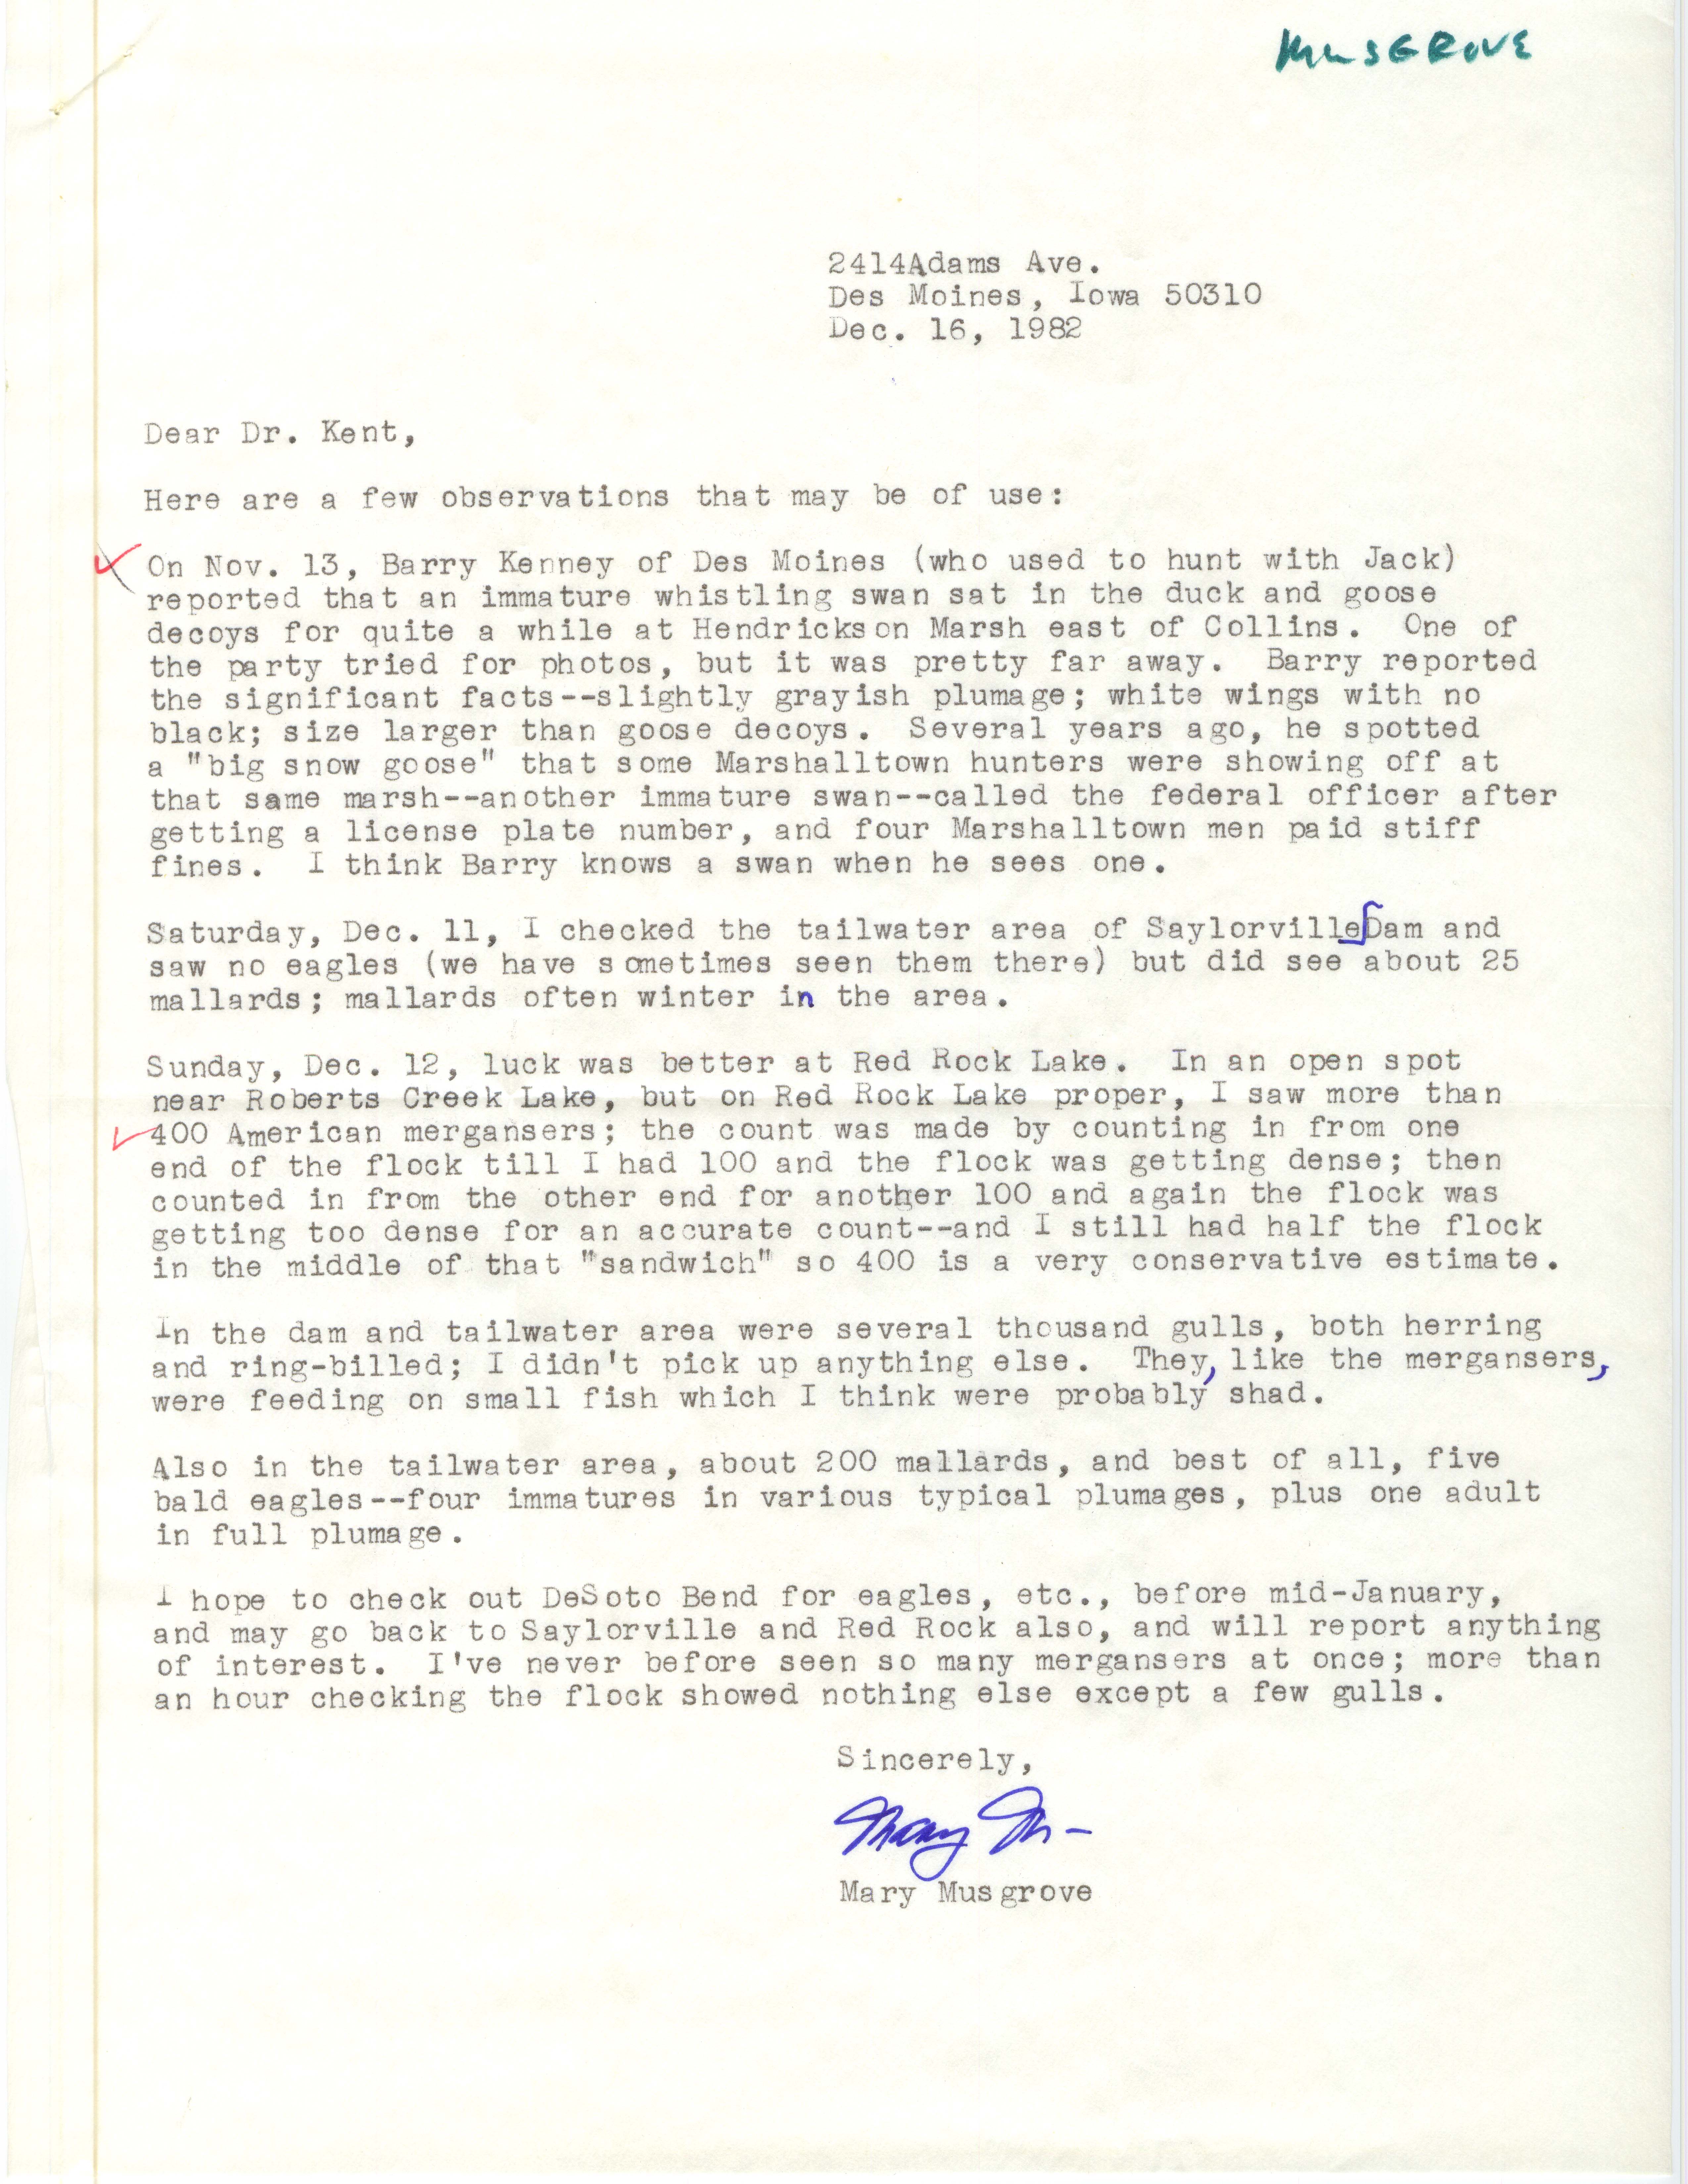 Mary R. Musgrove letter to Thomas H. Kent regarding winter bird sightings, December 16, 1982